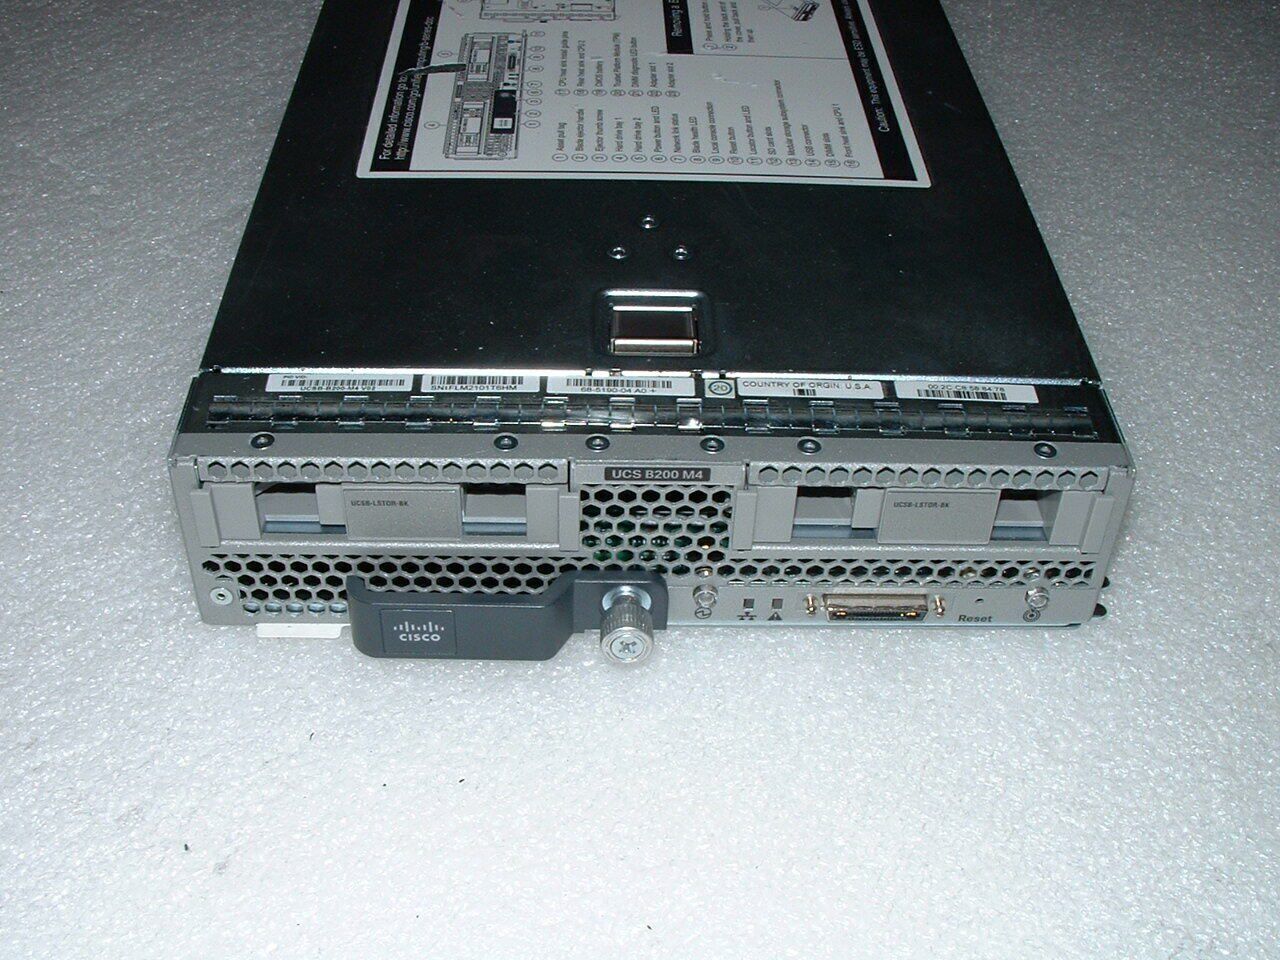 Cisco UCS B200 M4 DDR4 Server Blade 2x Intel E5-2680 V3 2.5ghz 12-Core CPUs